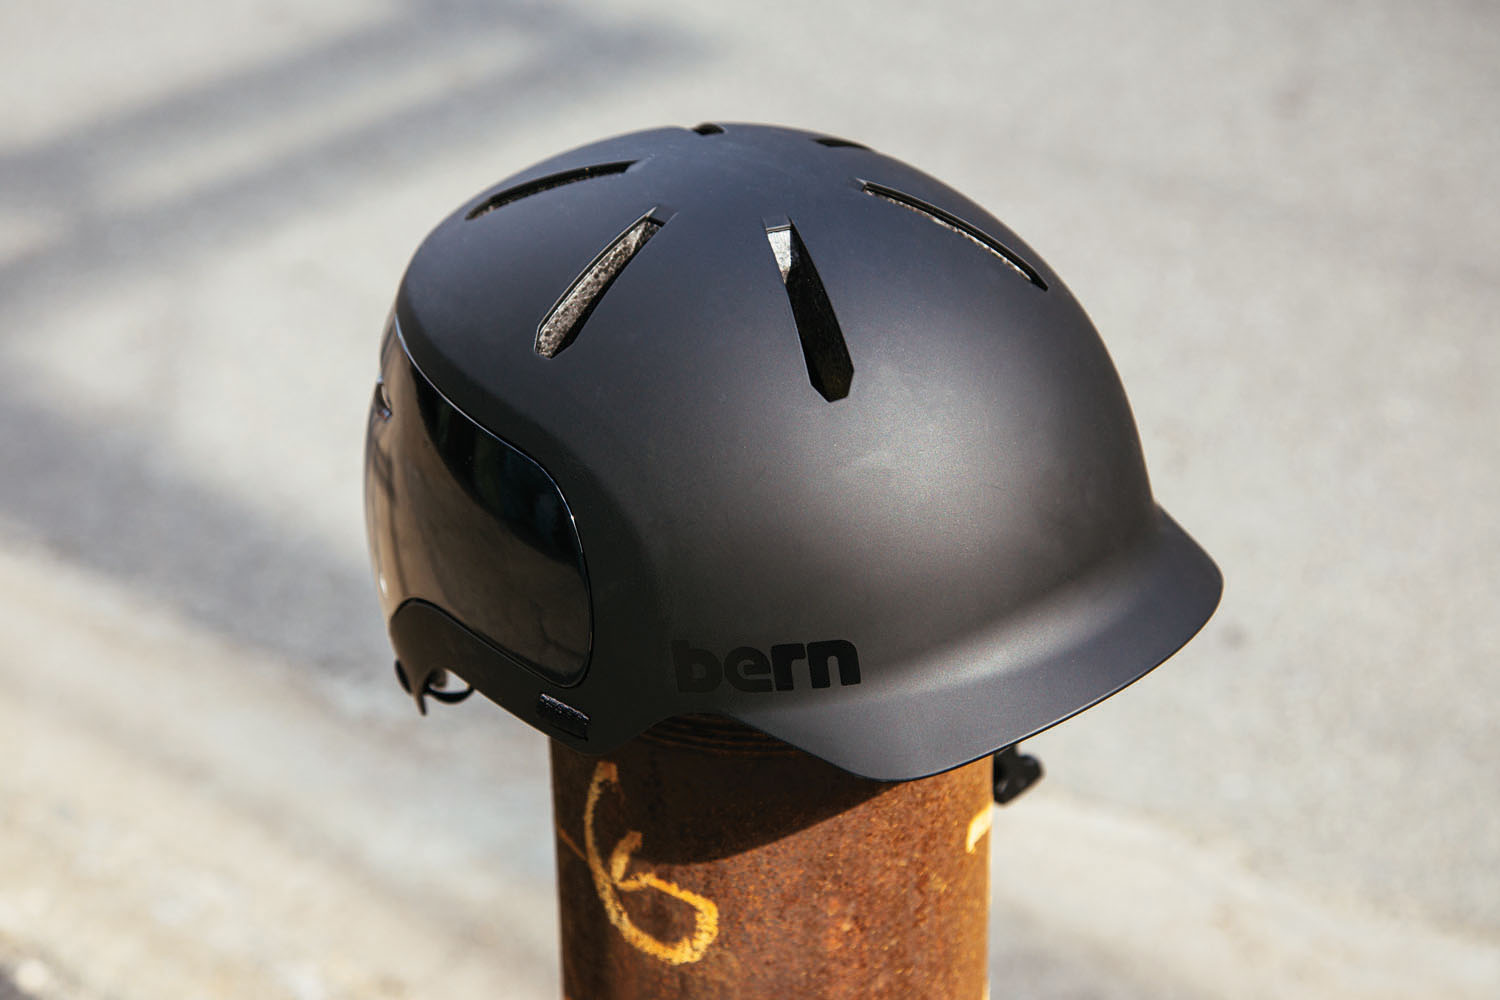 watts 2.0 bike helmet